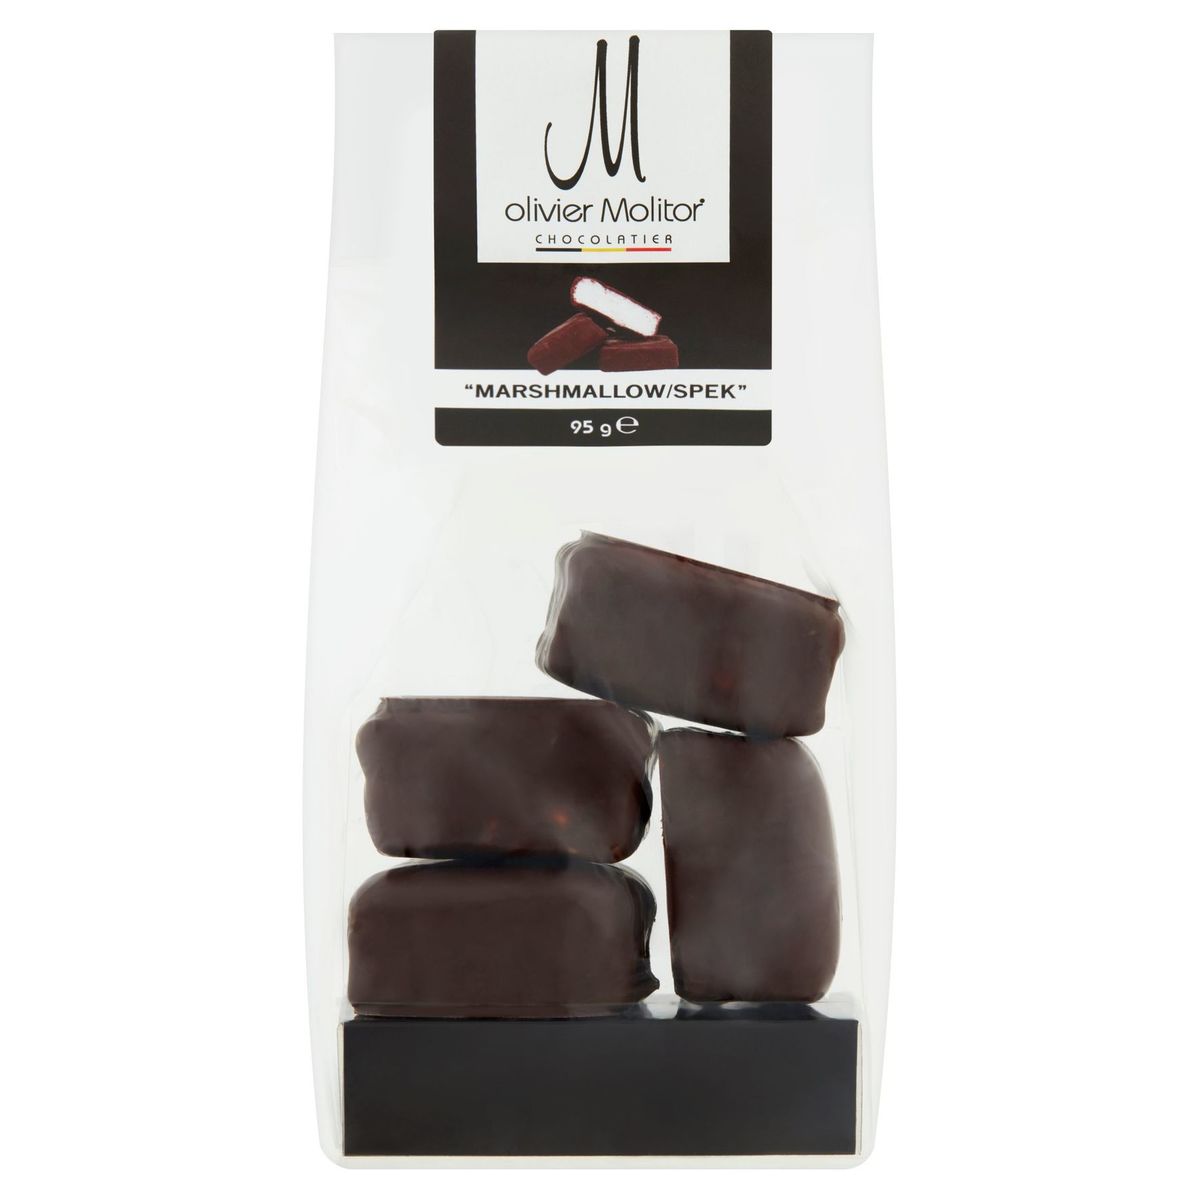 Olivier Molitor Chocolatier Marshmallow 95 g